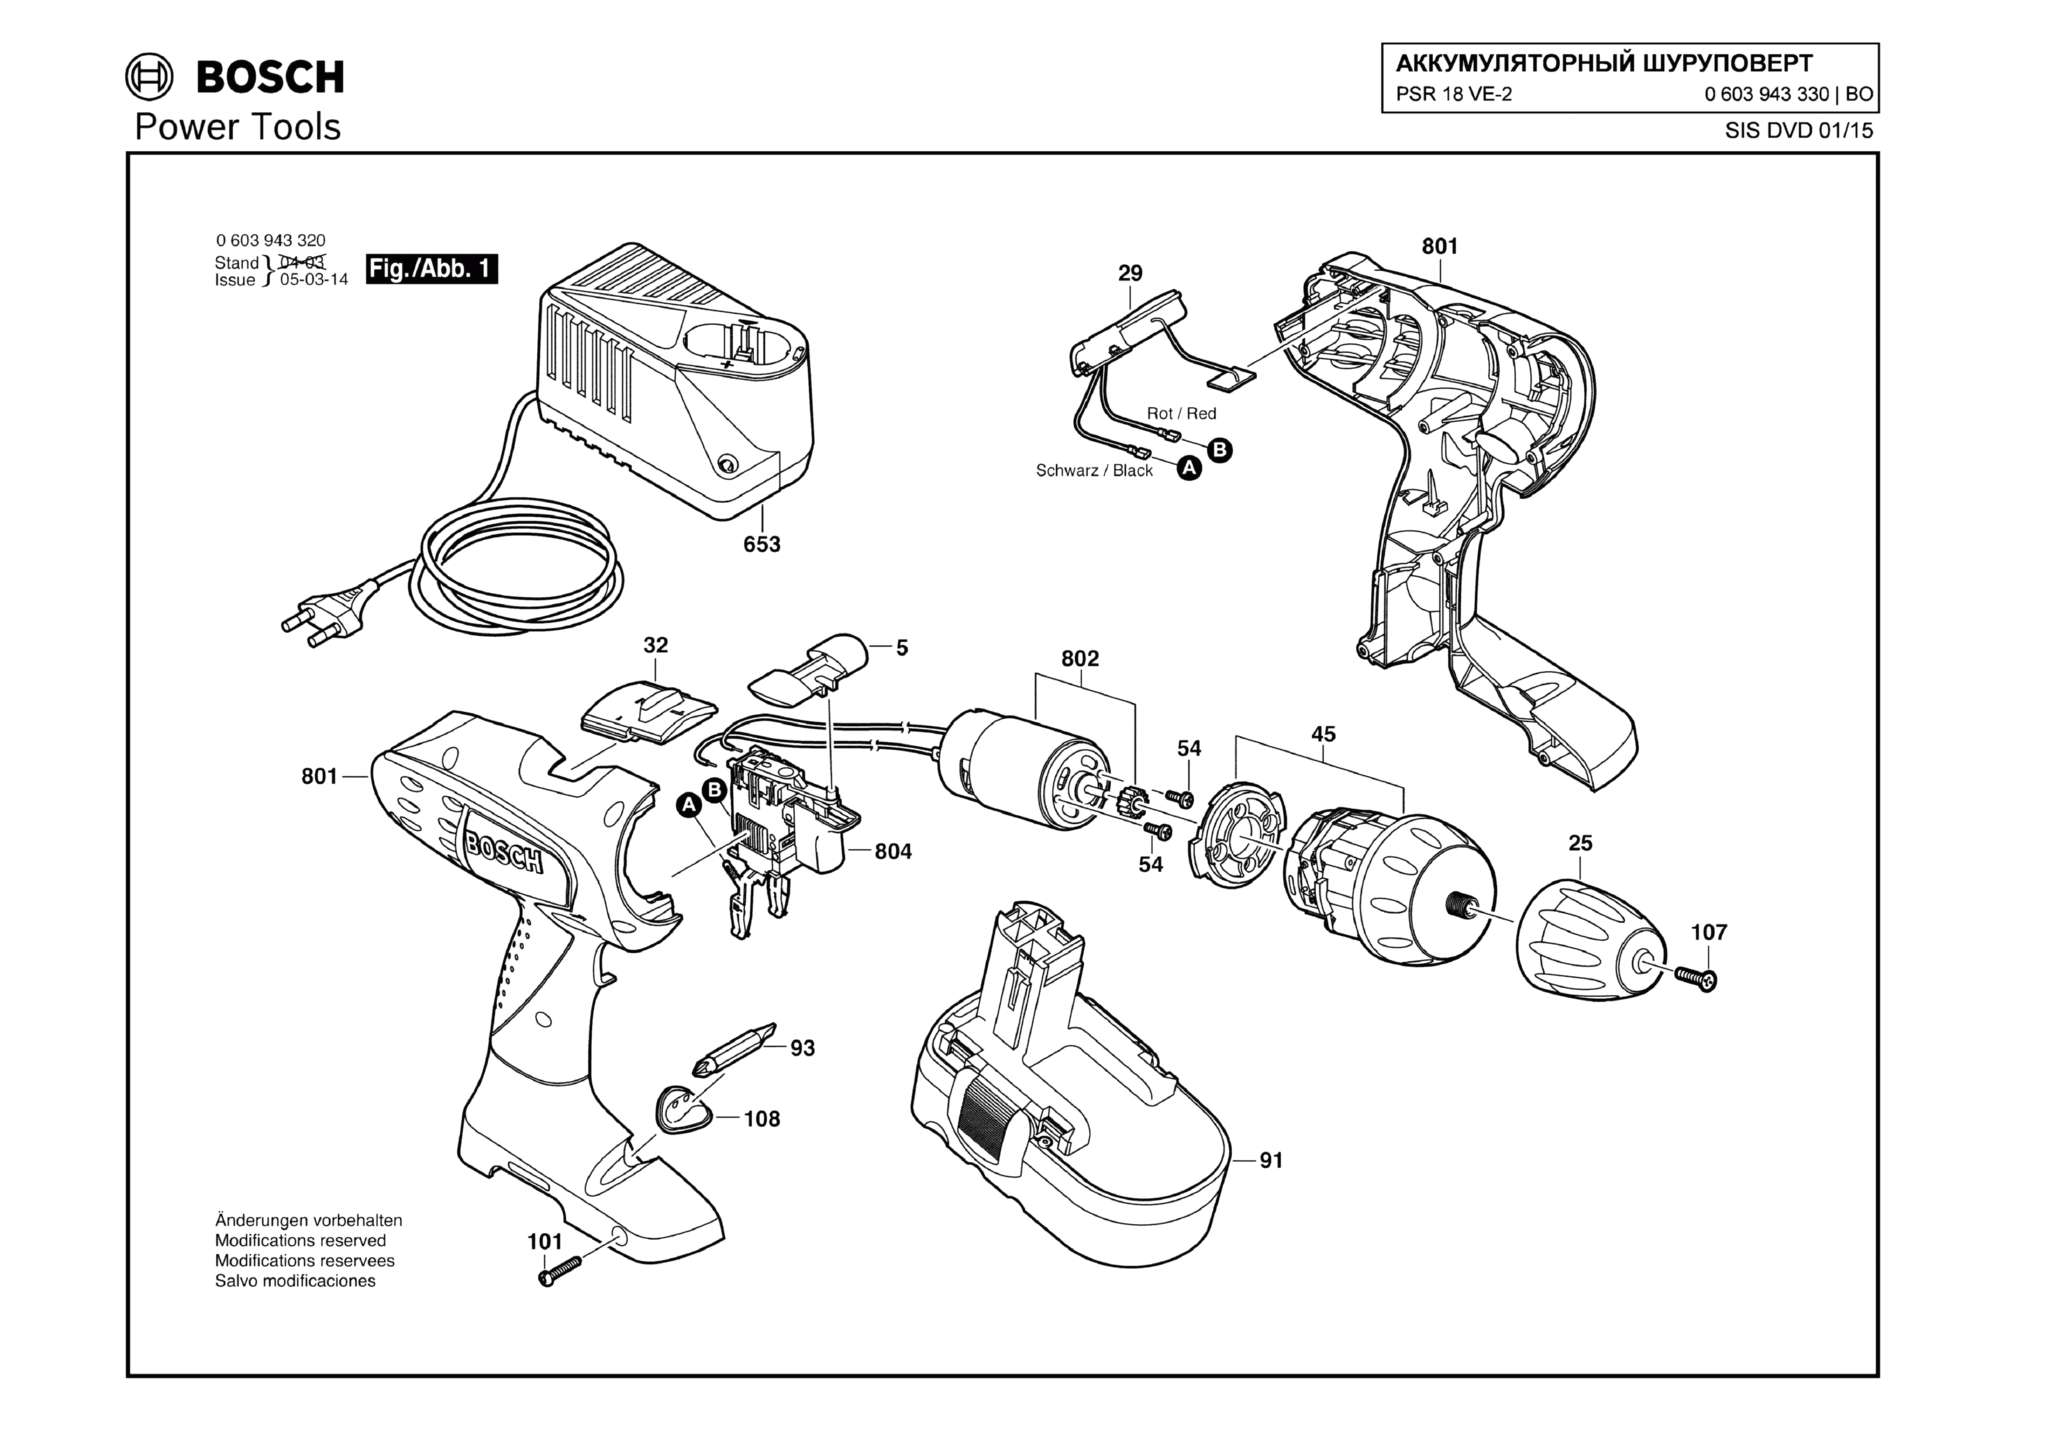 Запчасти, схема и деталировка Bosch PSR 18 VE-2 (ТИП 0603943330)